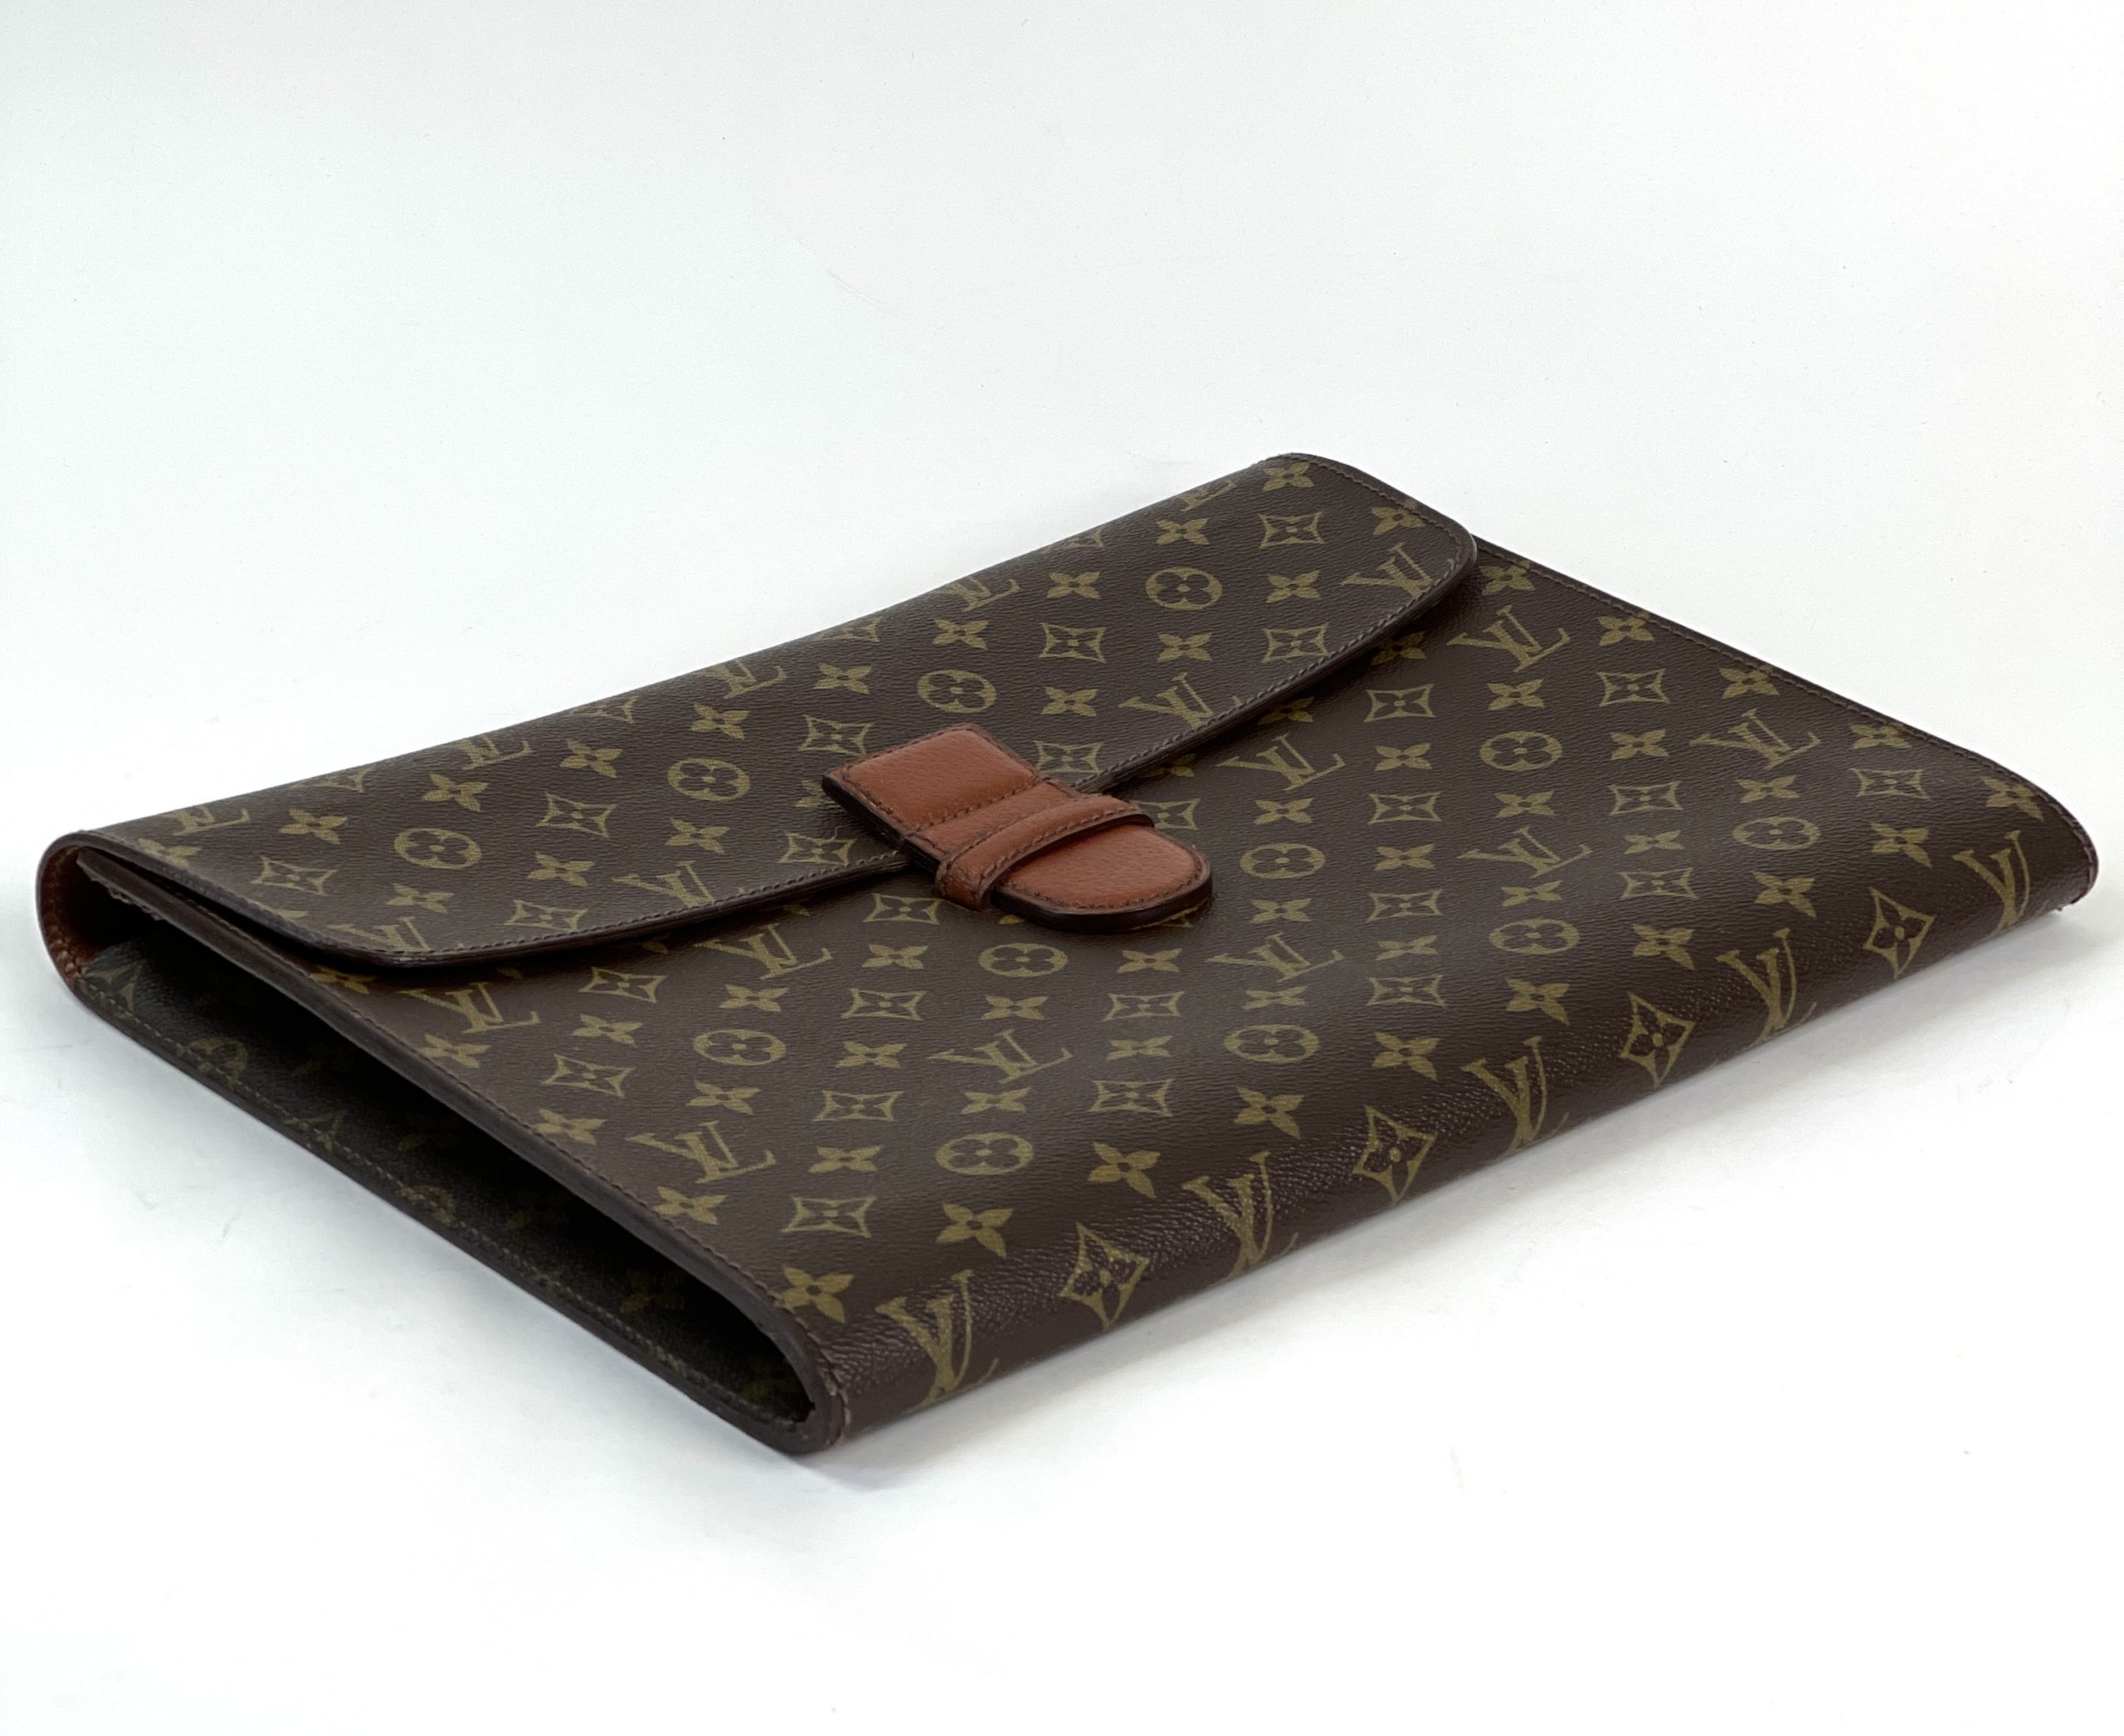 Replica Louis Vuitton Louis Vuitton Paper Shopping Gift Bag